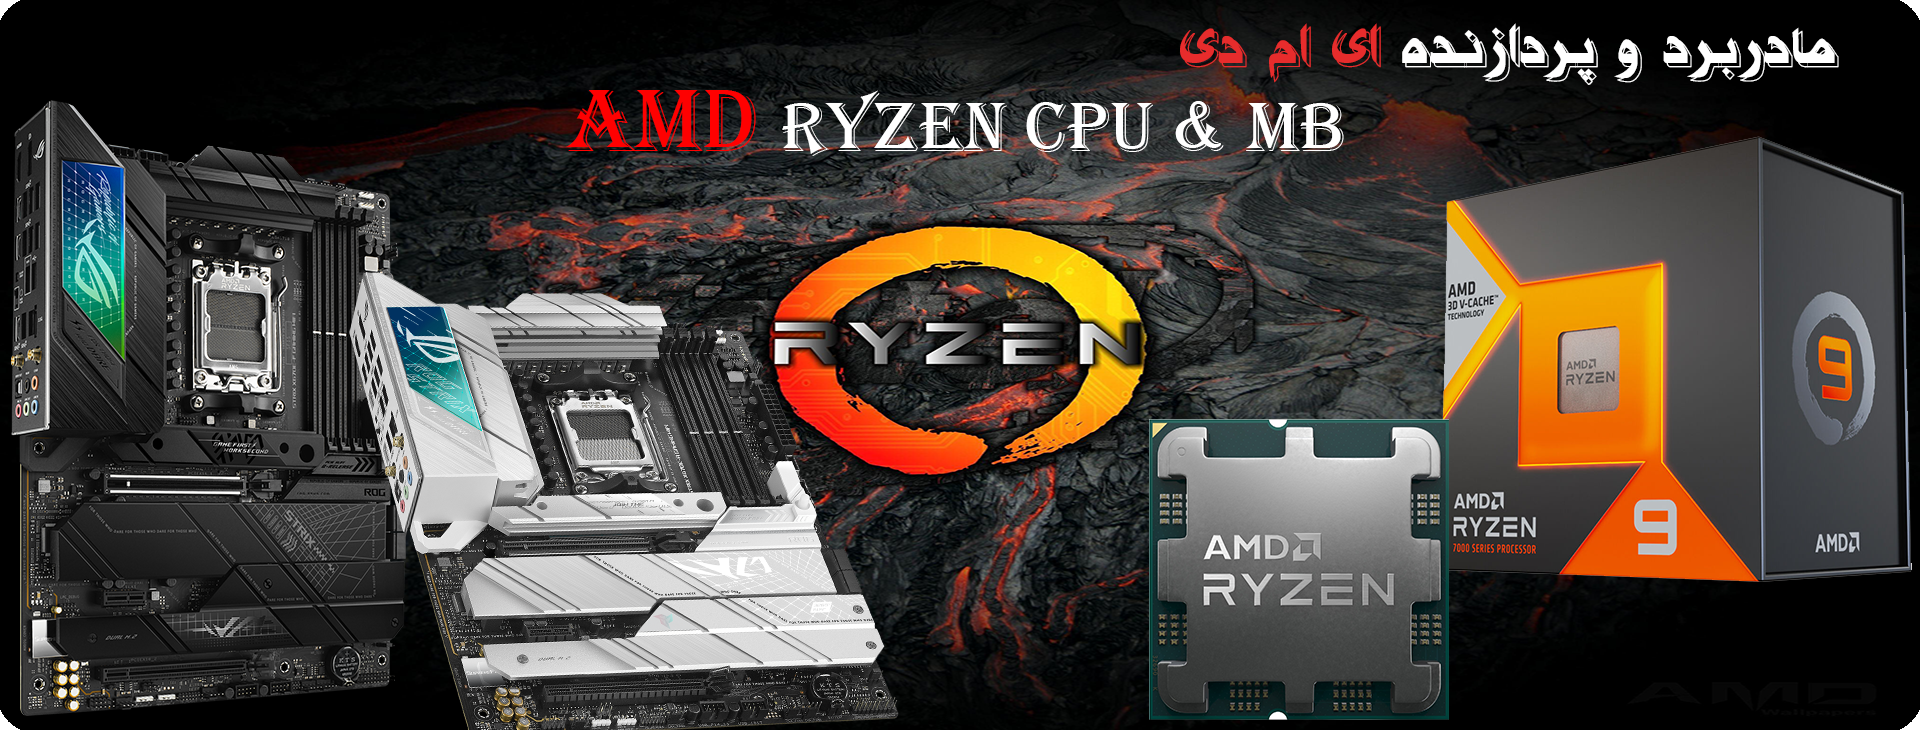 MAINBOARD & CPU AMD